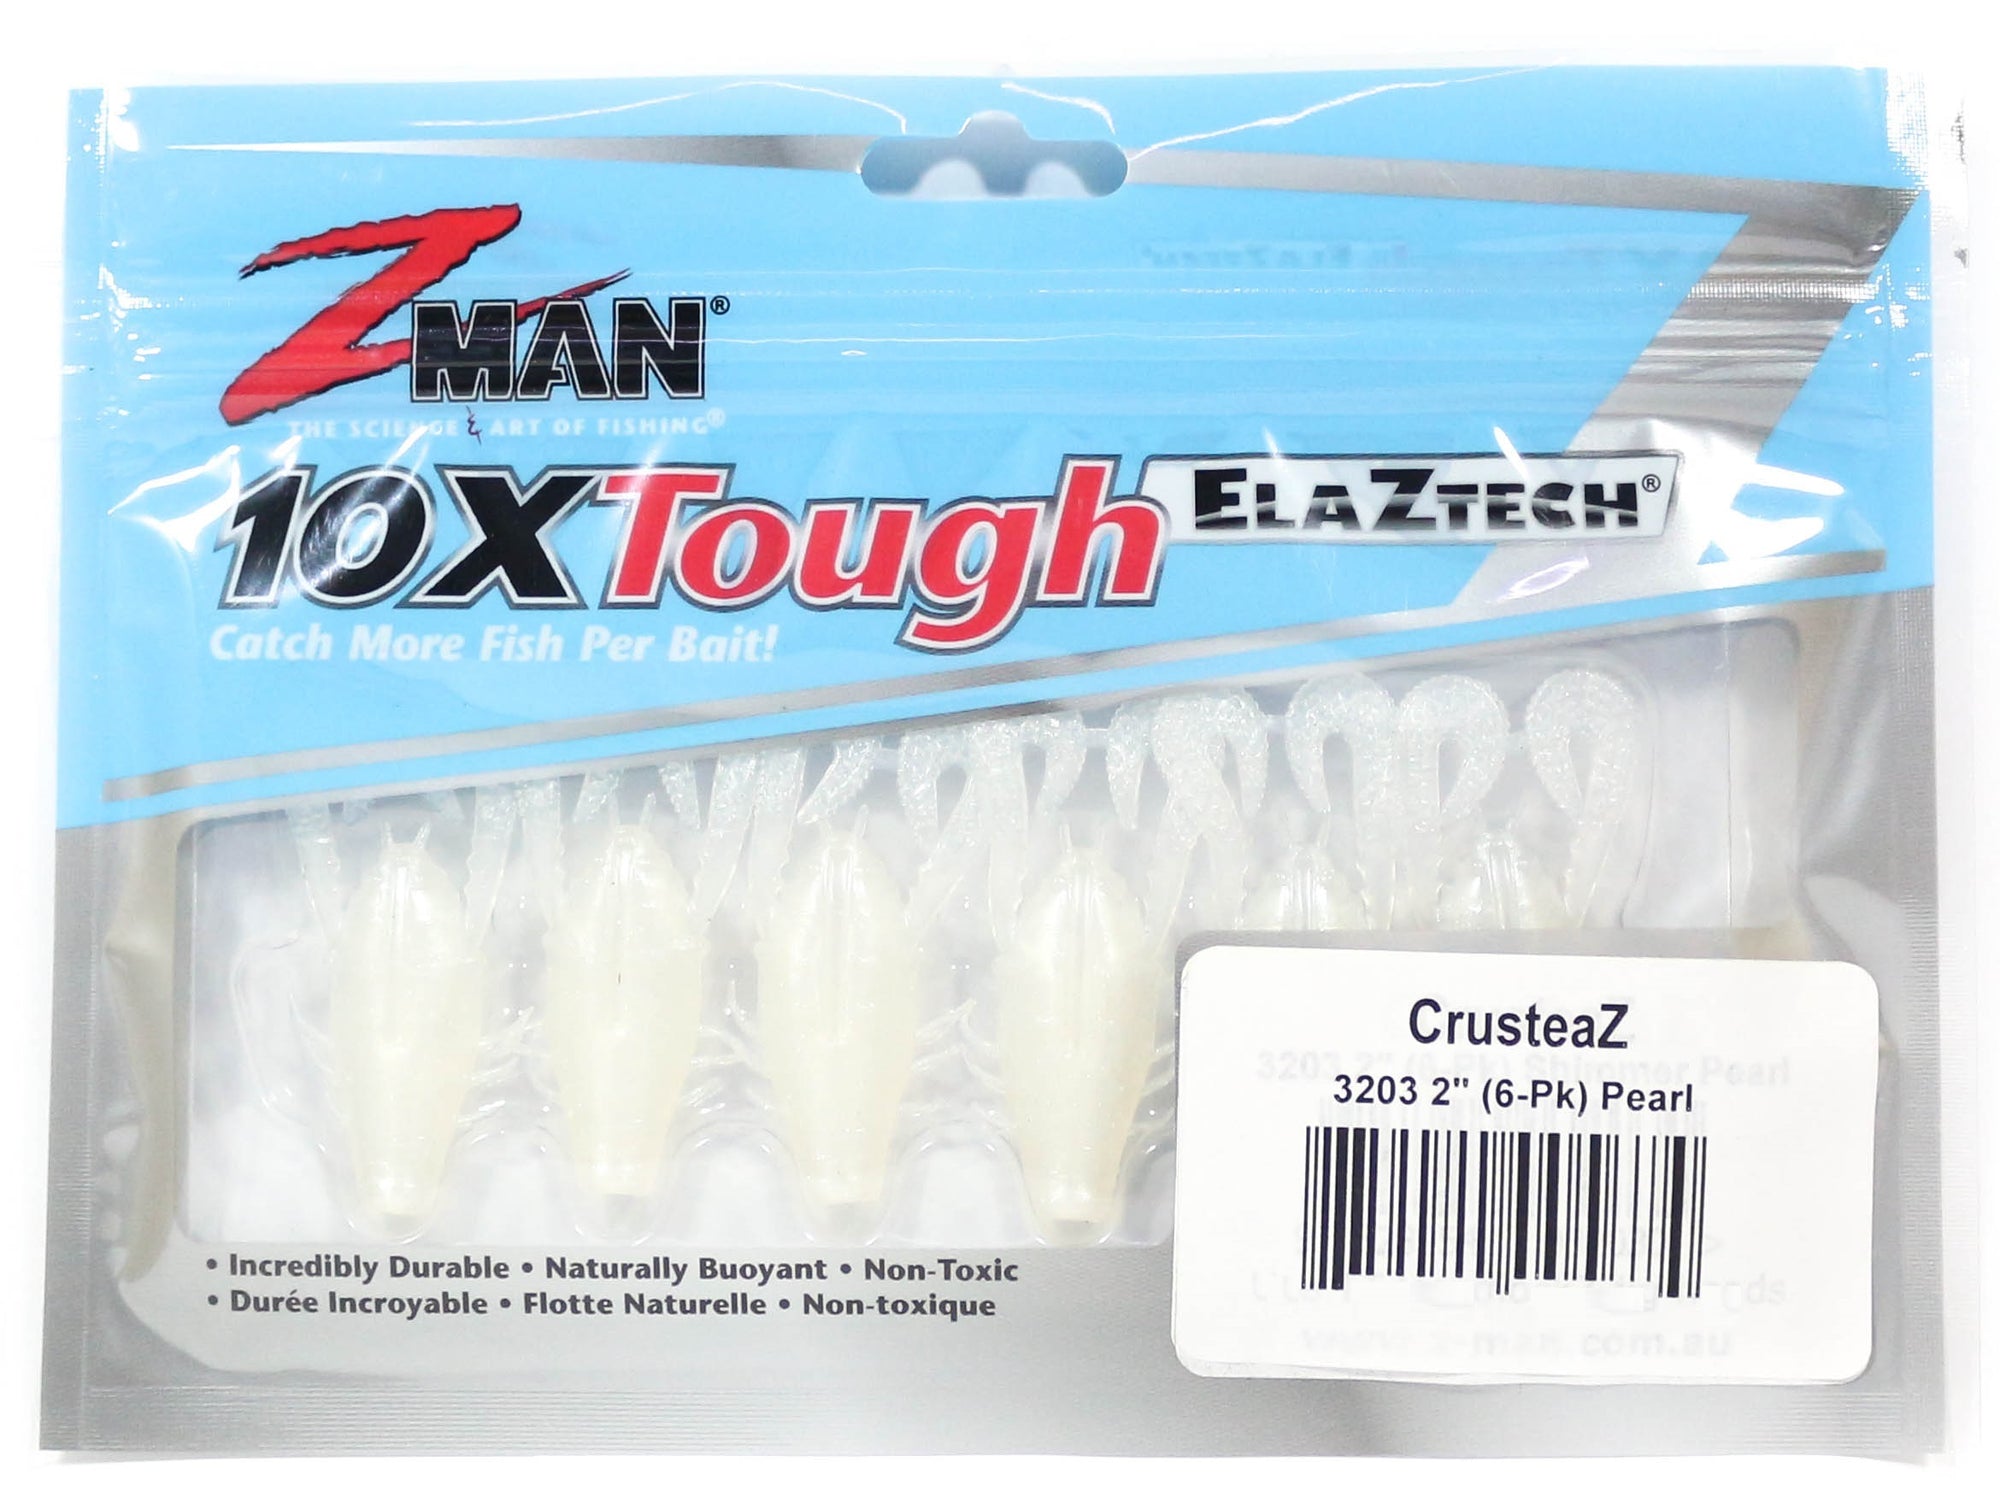 Zman Crusteaz 2 inch Soft Plastic Creature Lure Pearl - Mega Clearance